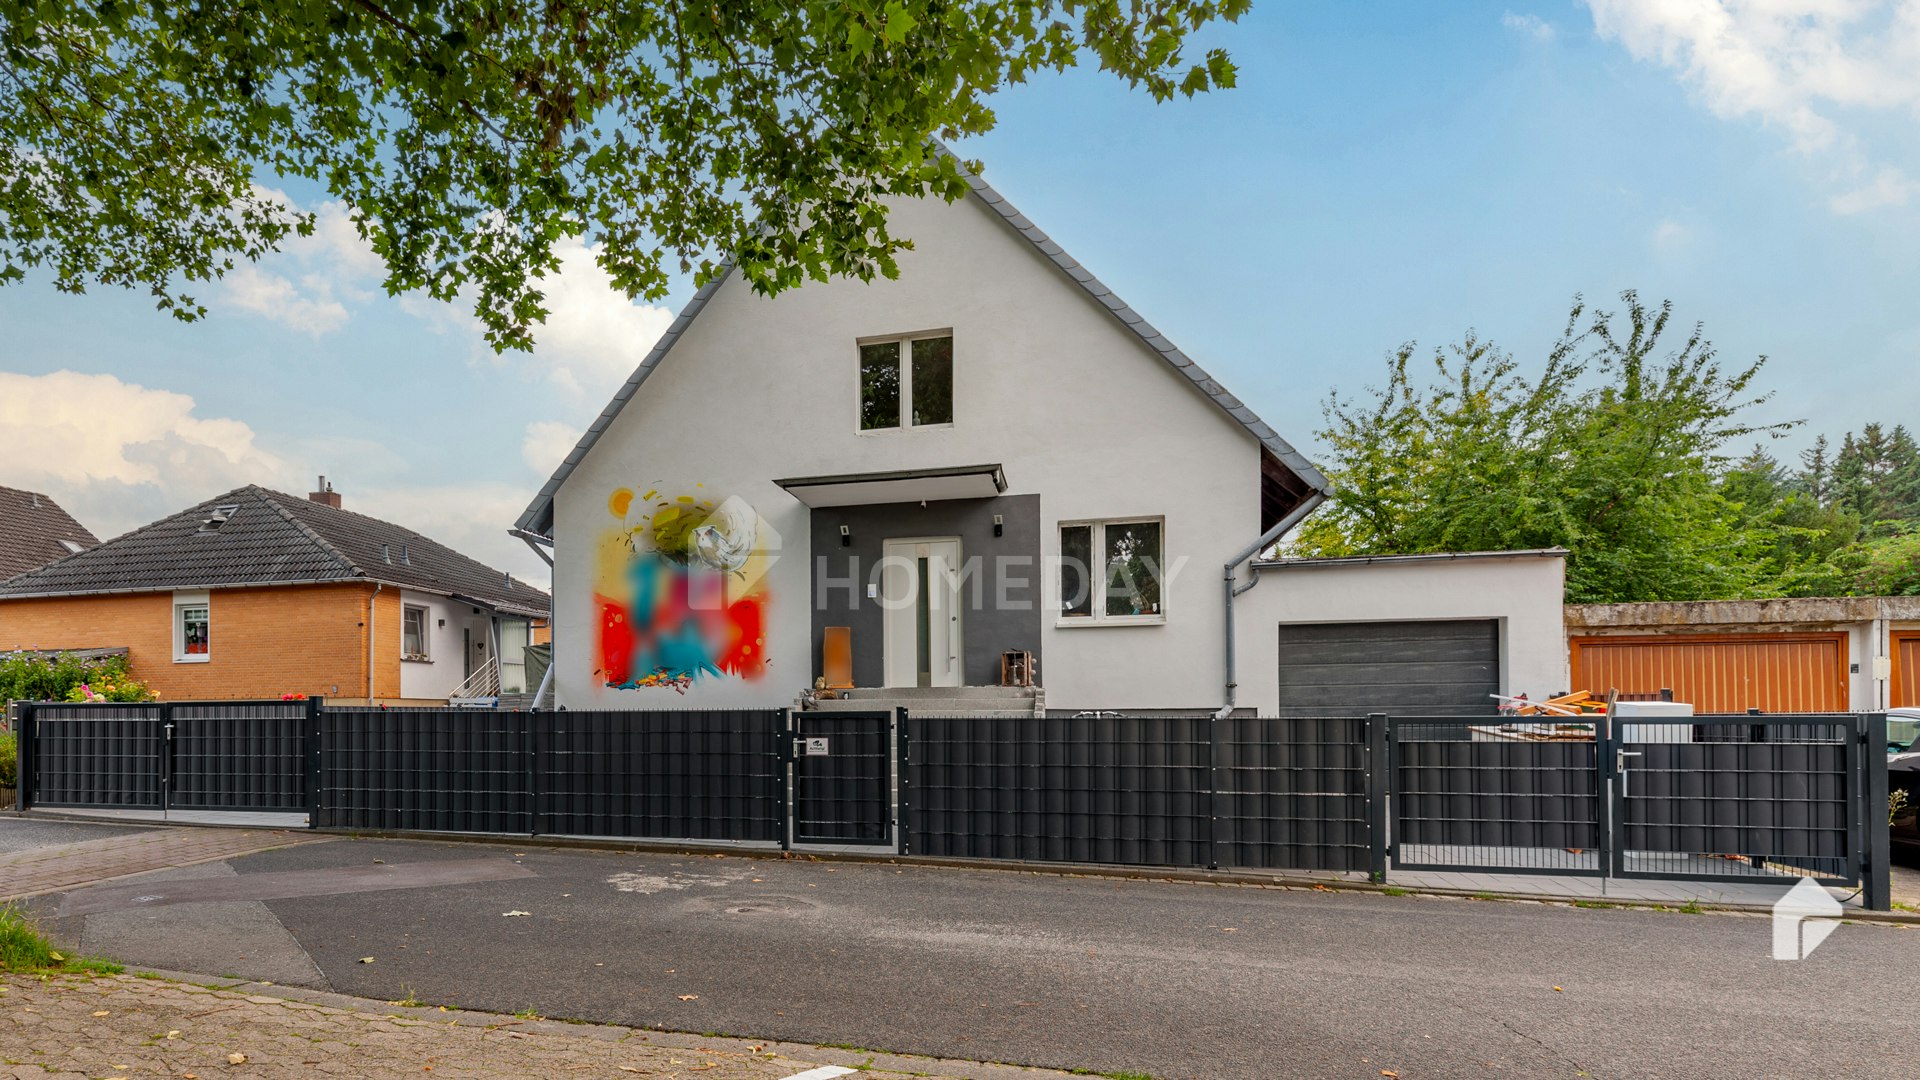 Einfamilienhaus zum Kauf 349.000 € 6 Zimmer 231 m² 623 m² Grundstück Königslutter Königslutter am Elm 38154